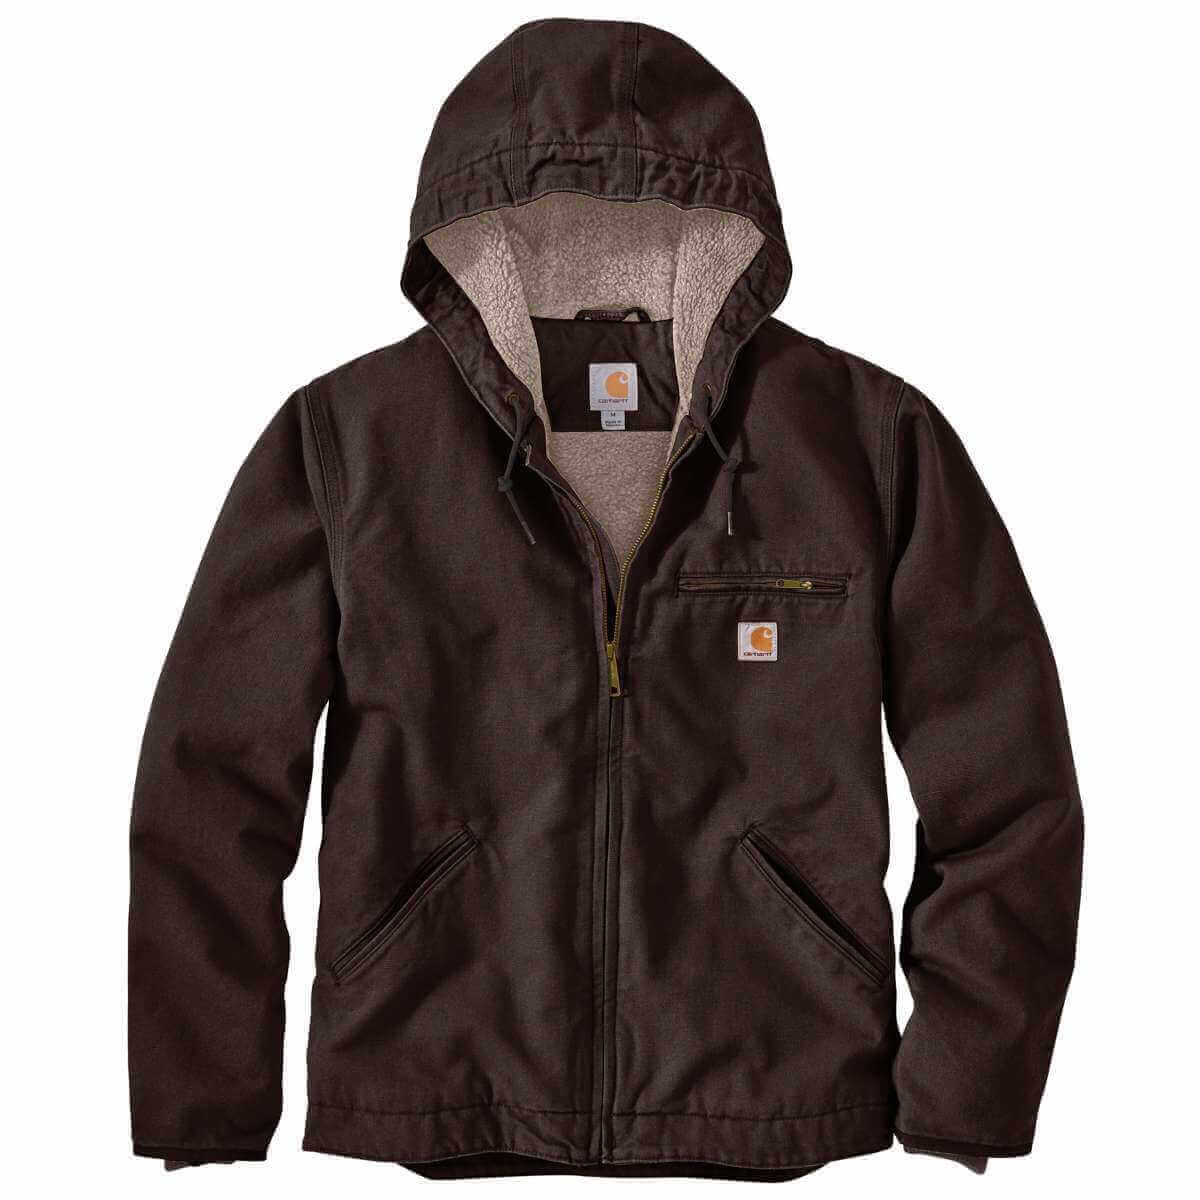 104392 - Carhartt Men's Washed Duck Sherpa Lined Jacket